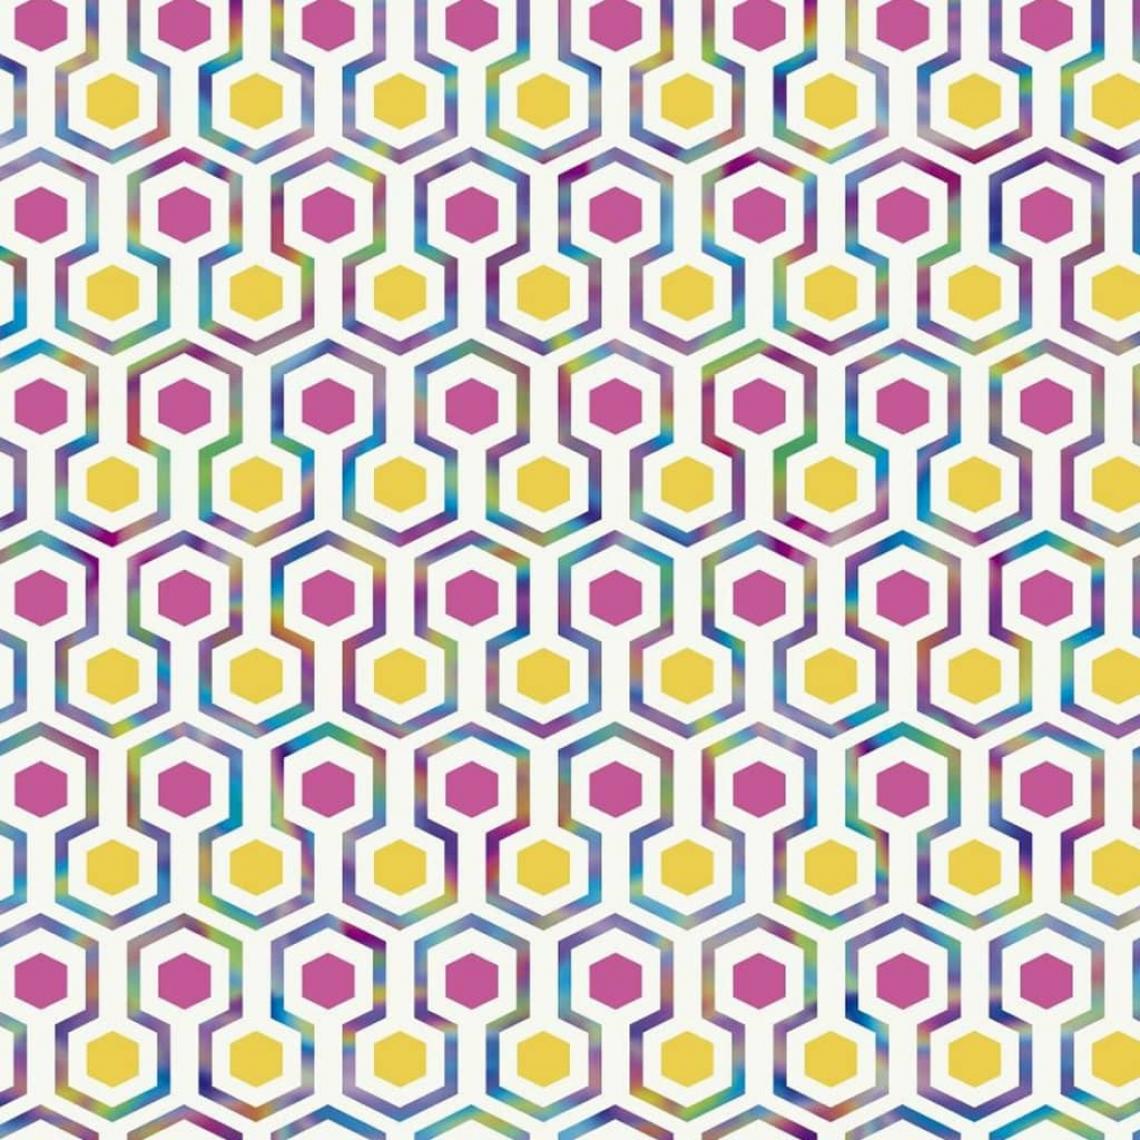 GOOD VIBES - Good Vibes Papier peint Hexagon Pattern Rose et jaune - Papier peint